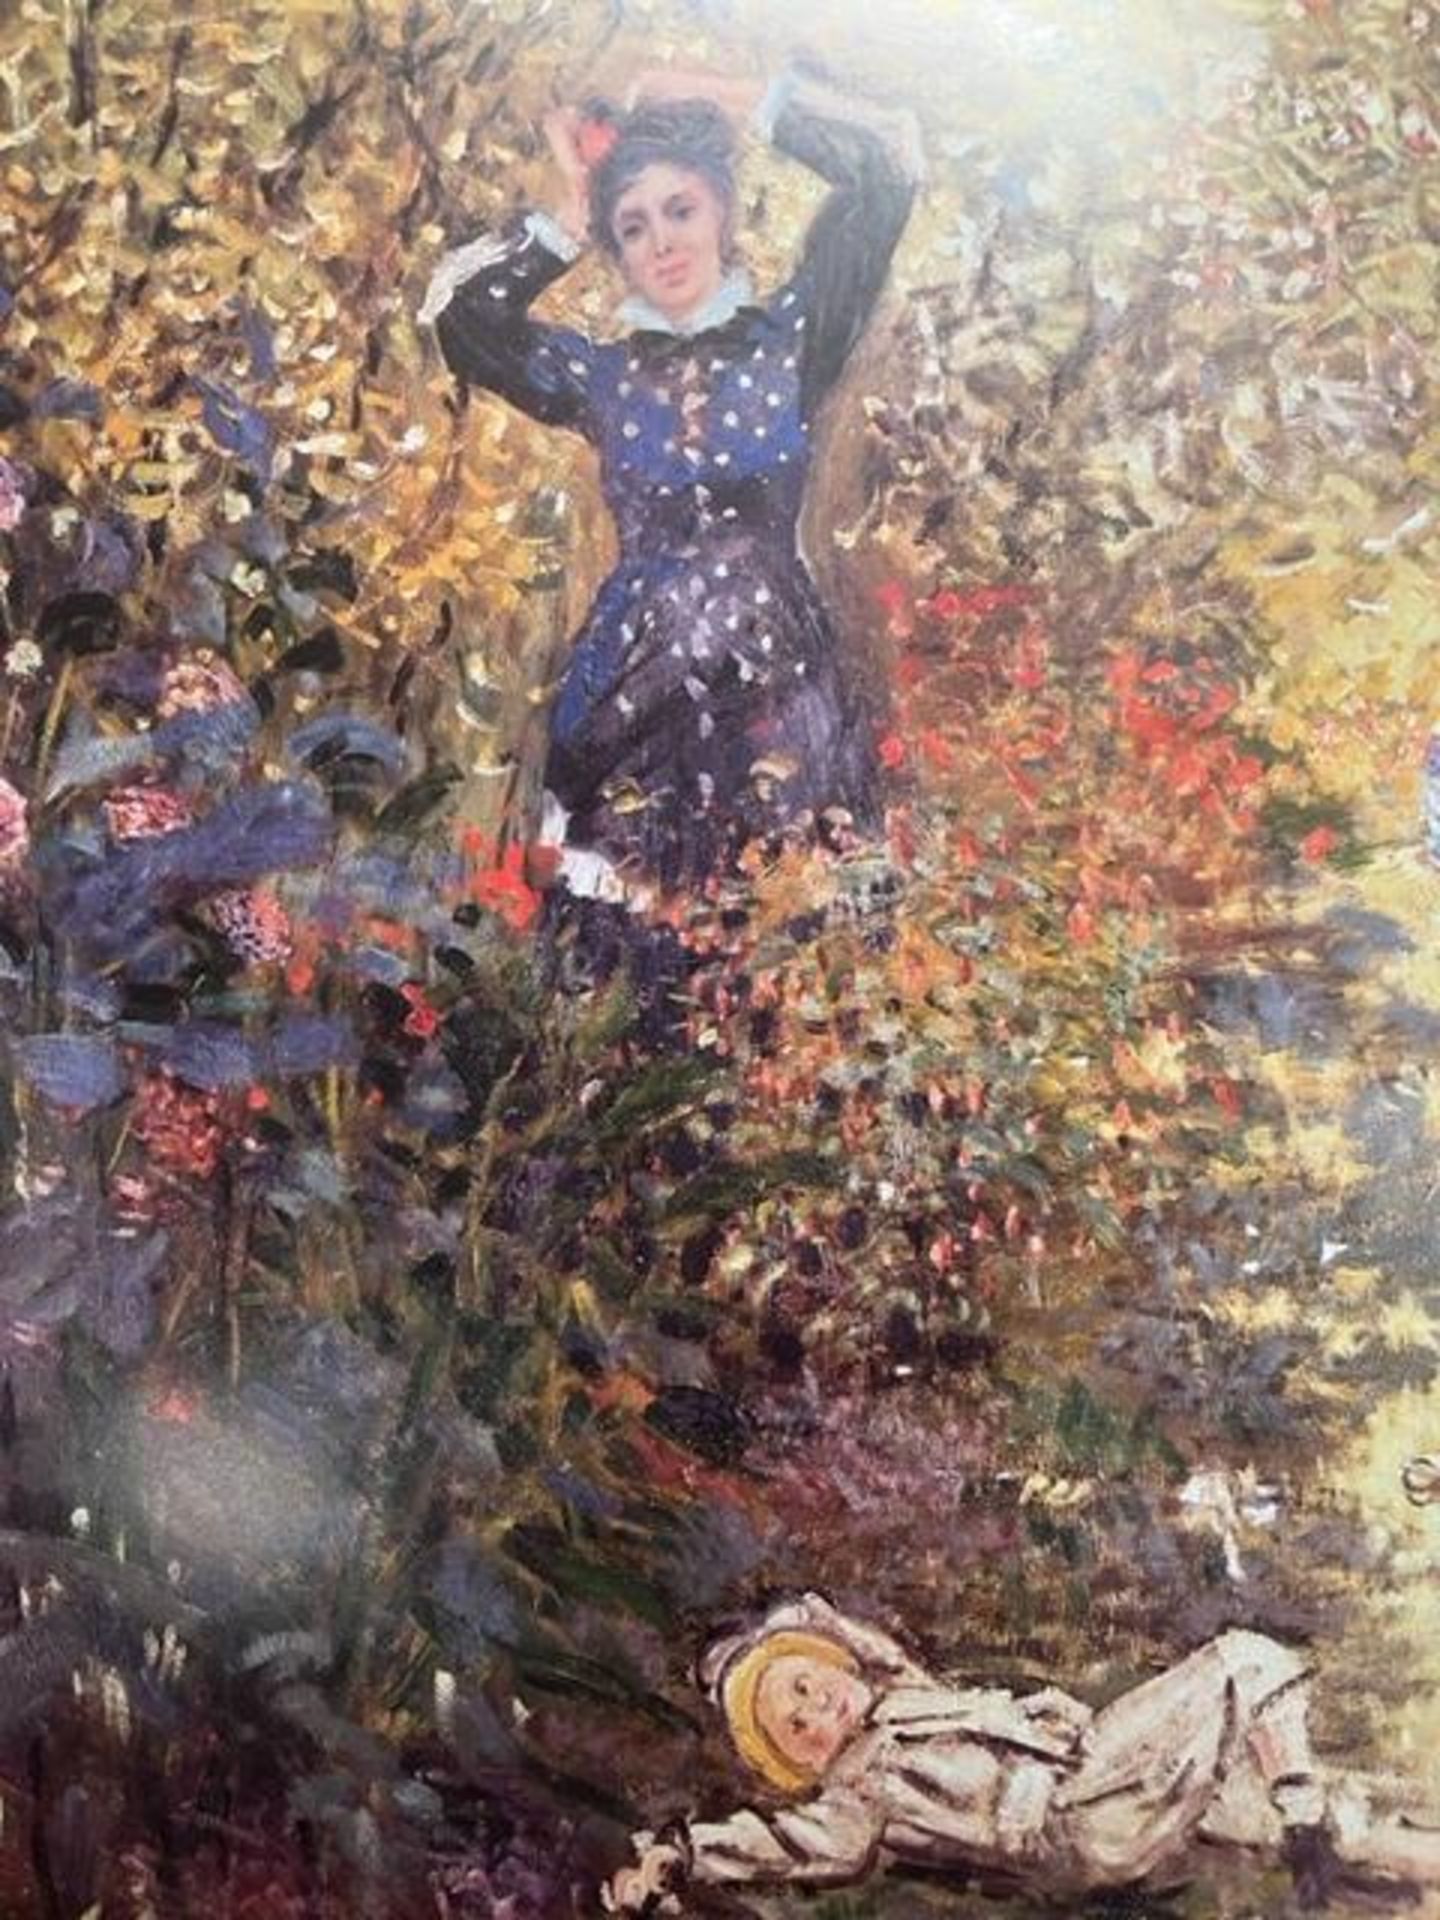 Claude Monet "Camille and Jean Monet" Print.